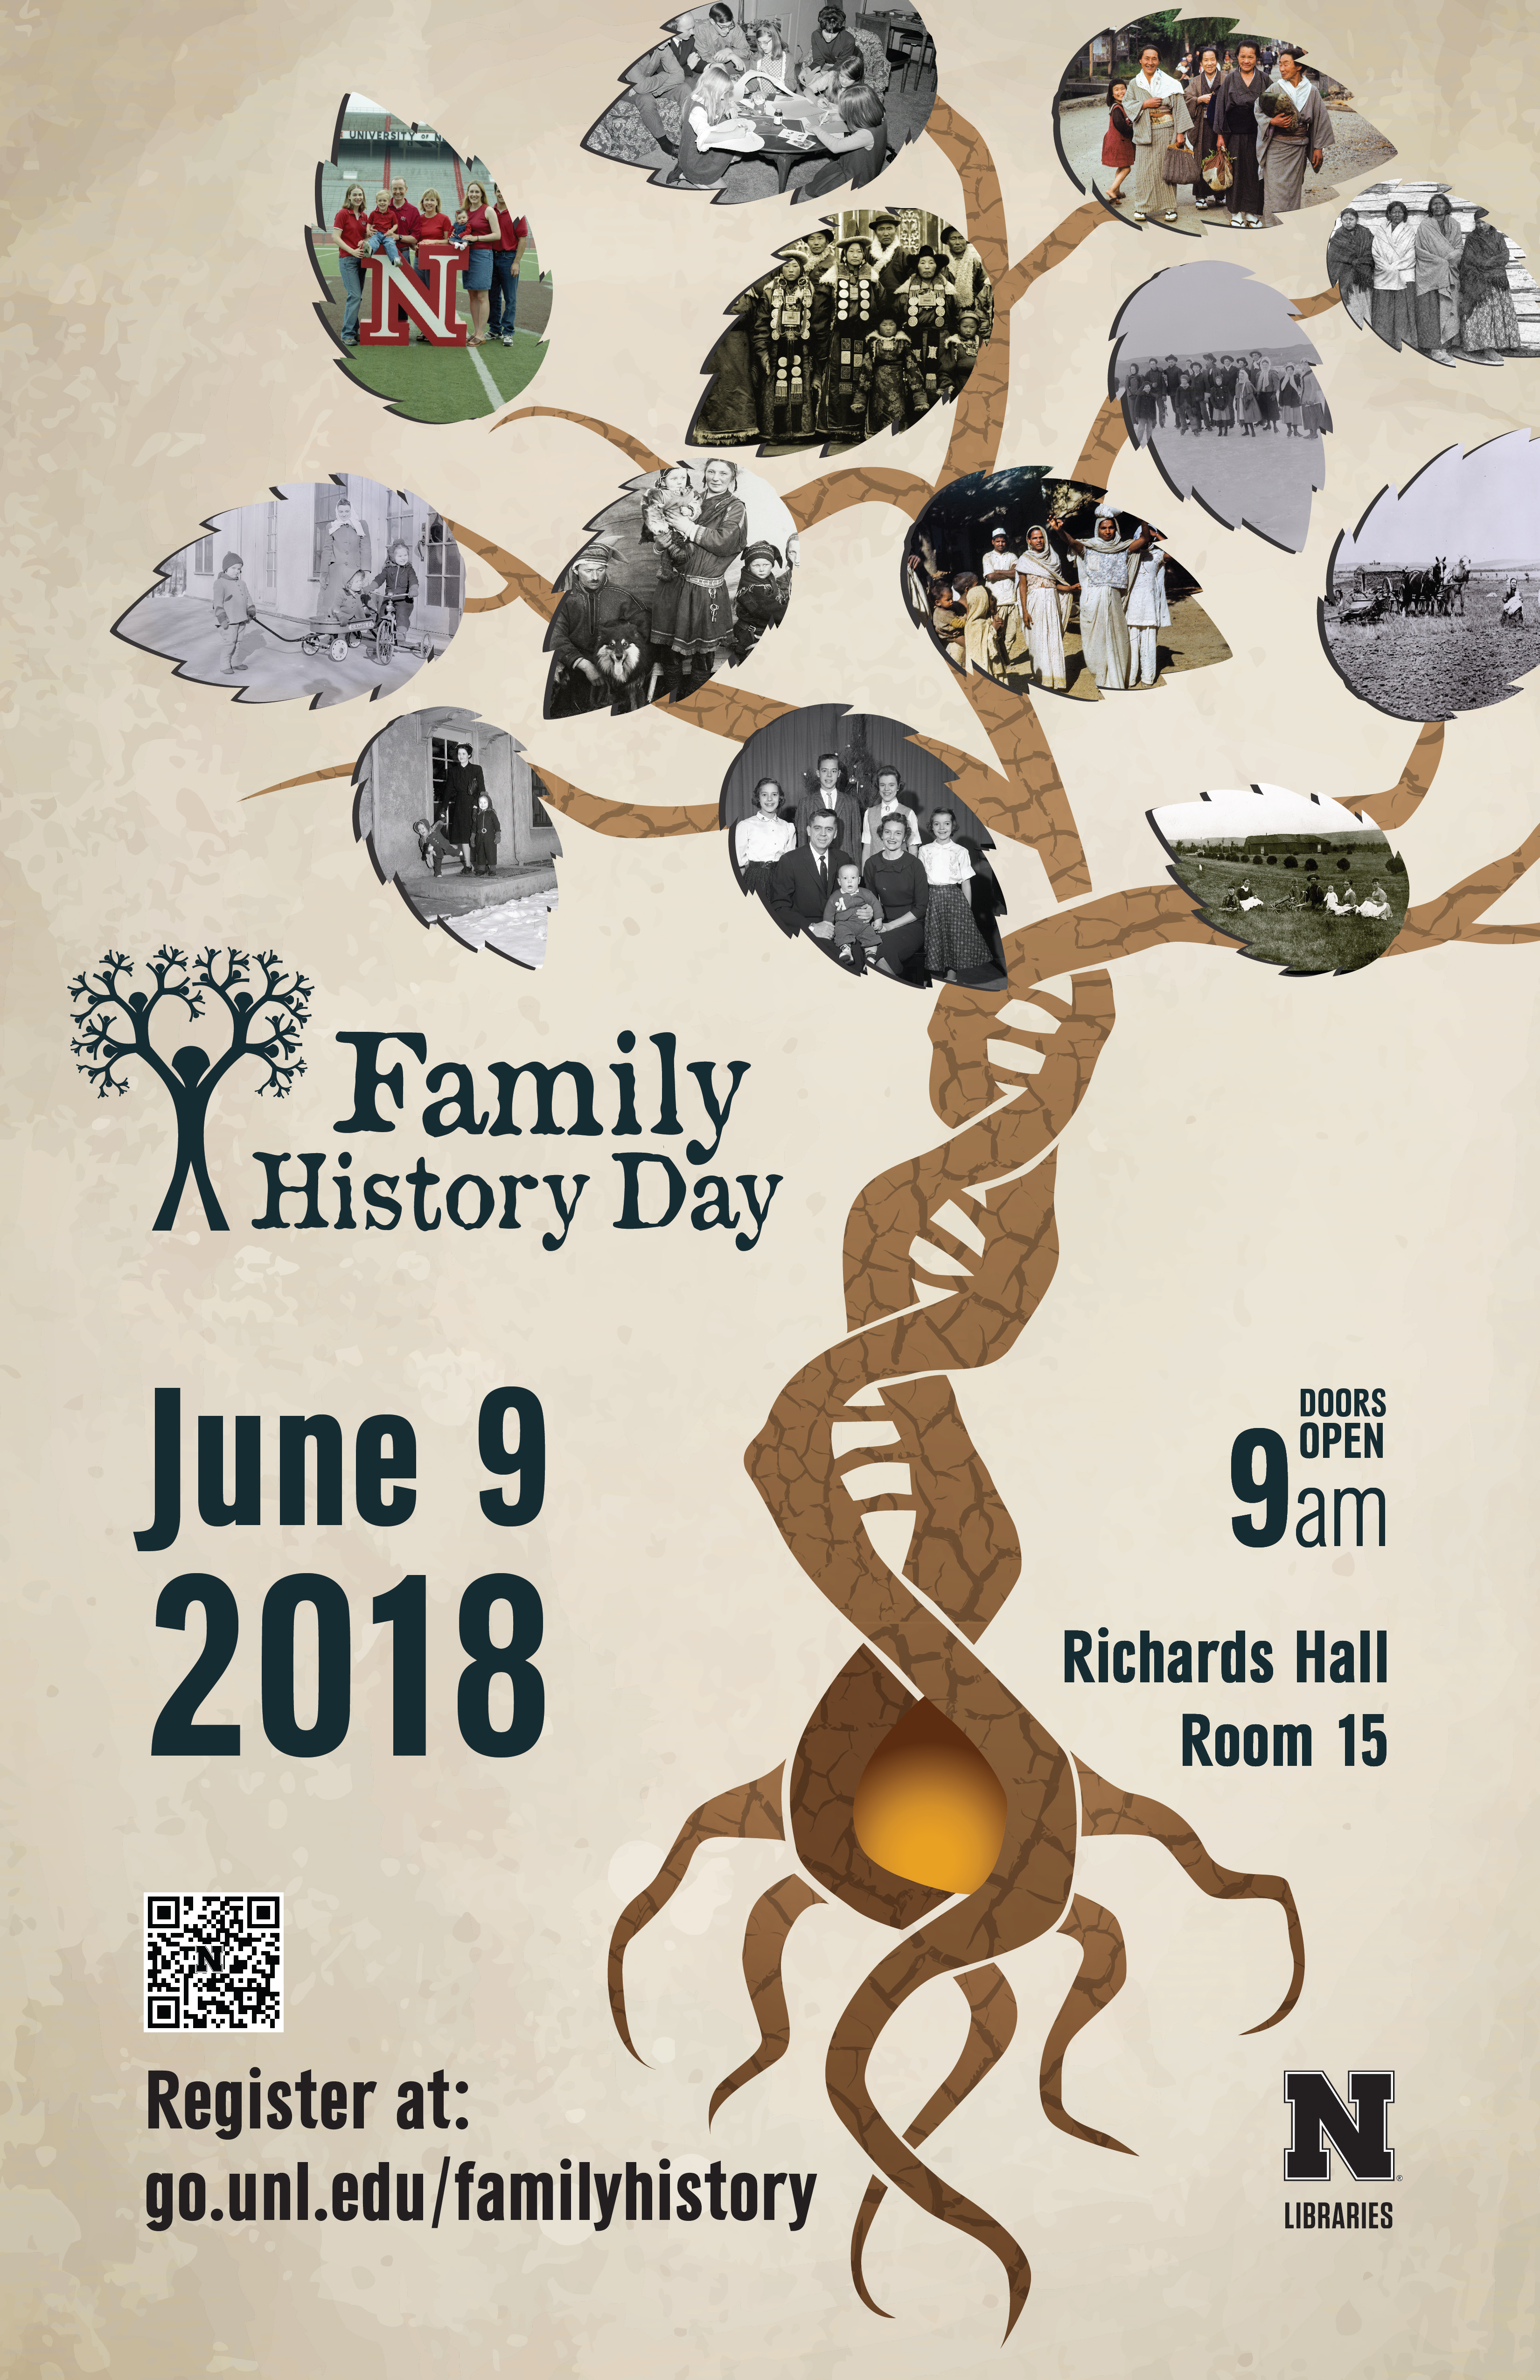 Family History Day at UNL